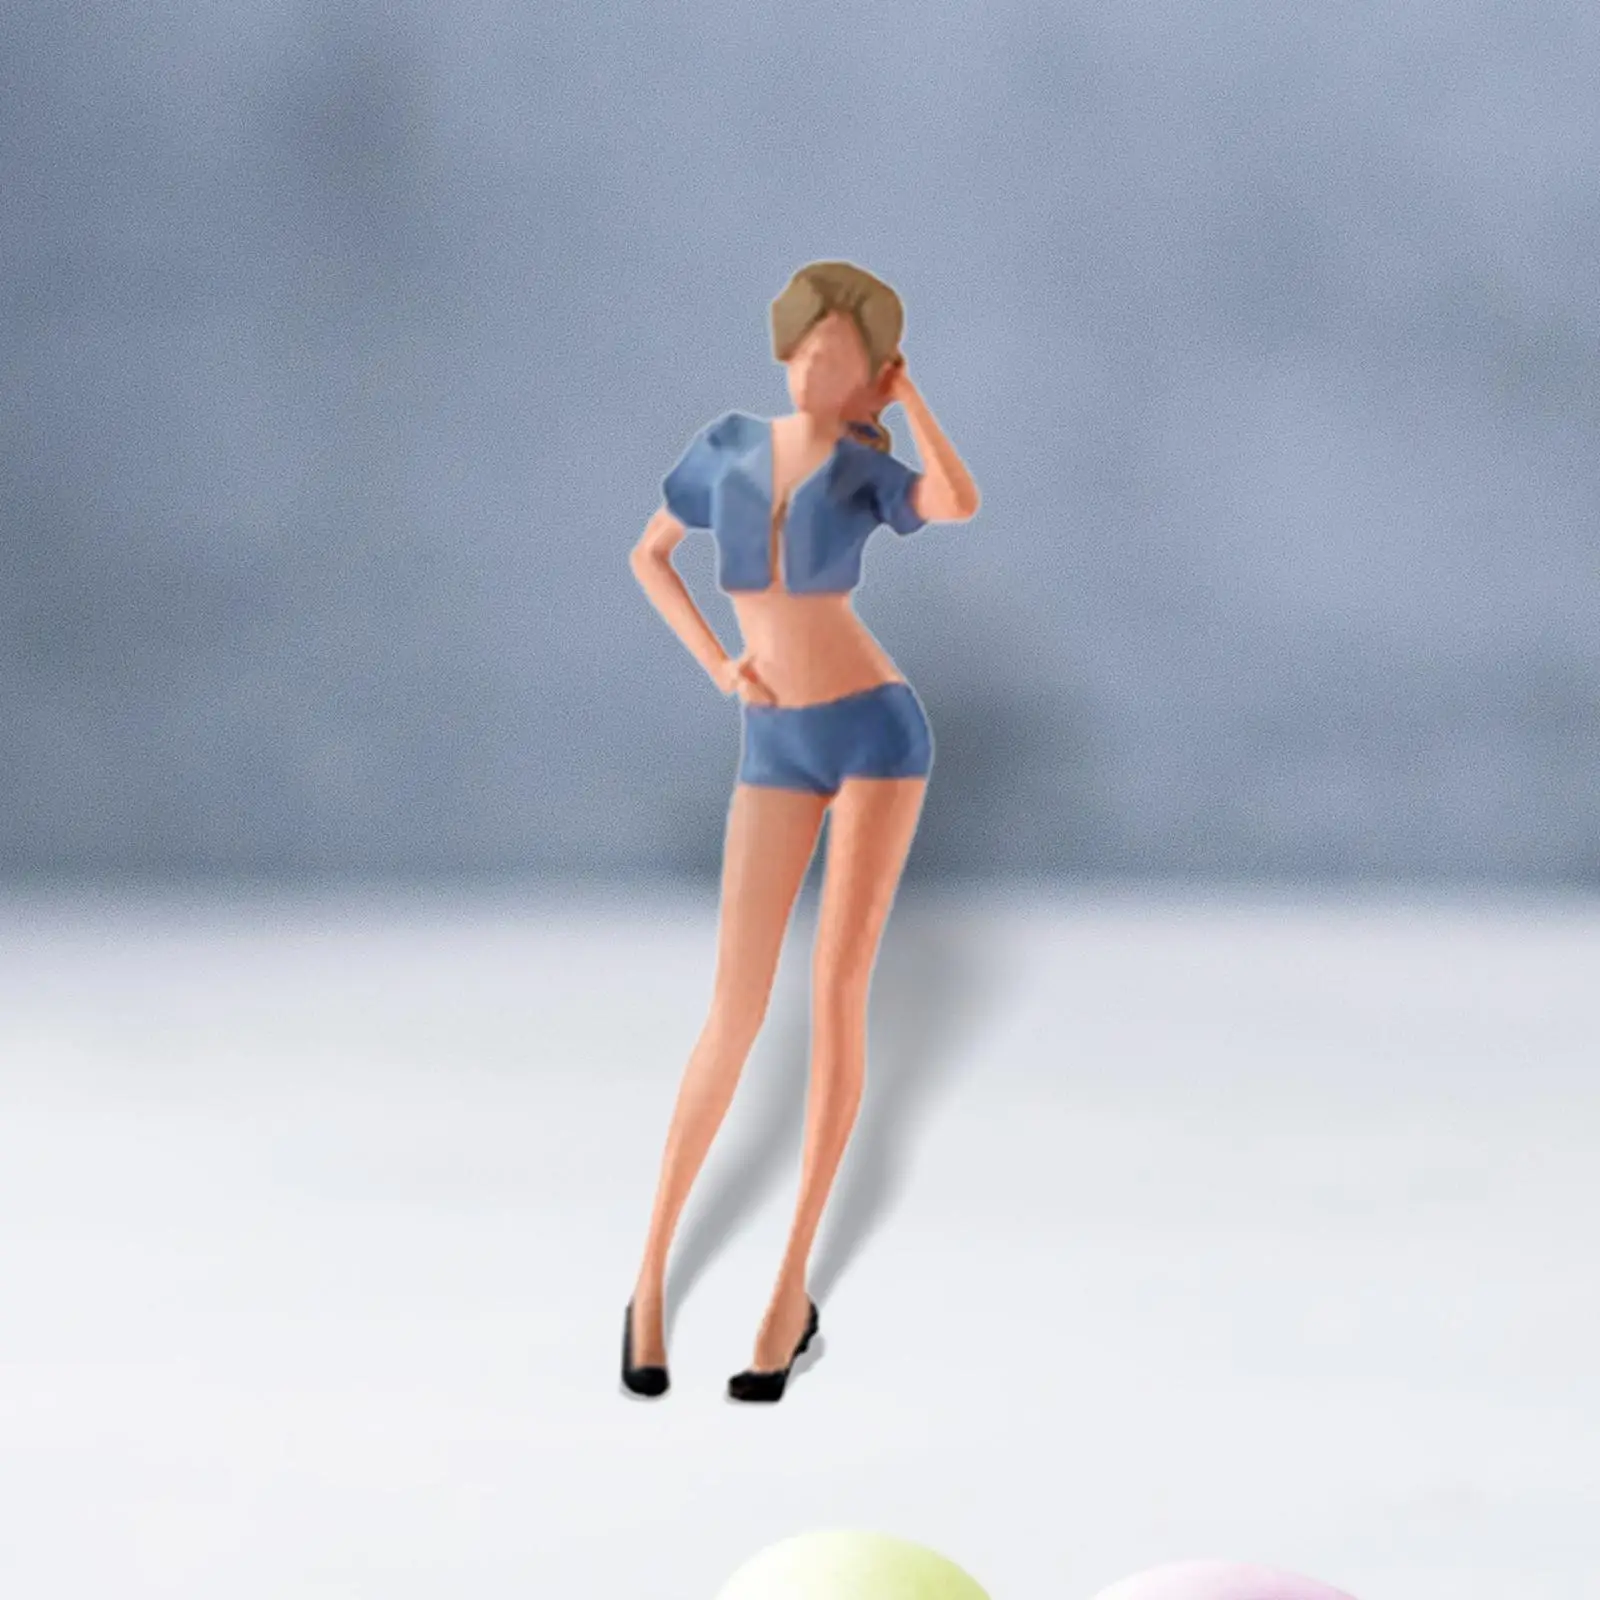 Realistic 1/64 Scale People Figures Simulation Figurines Mini People Model Ornament for DIY Scene Diorama Dollhouse Layout Decor